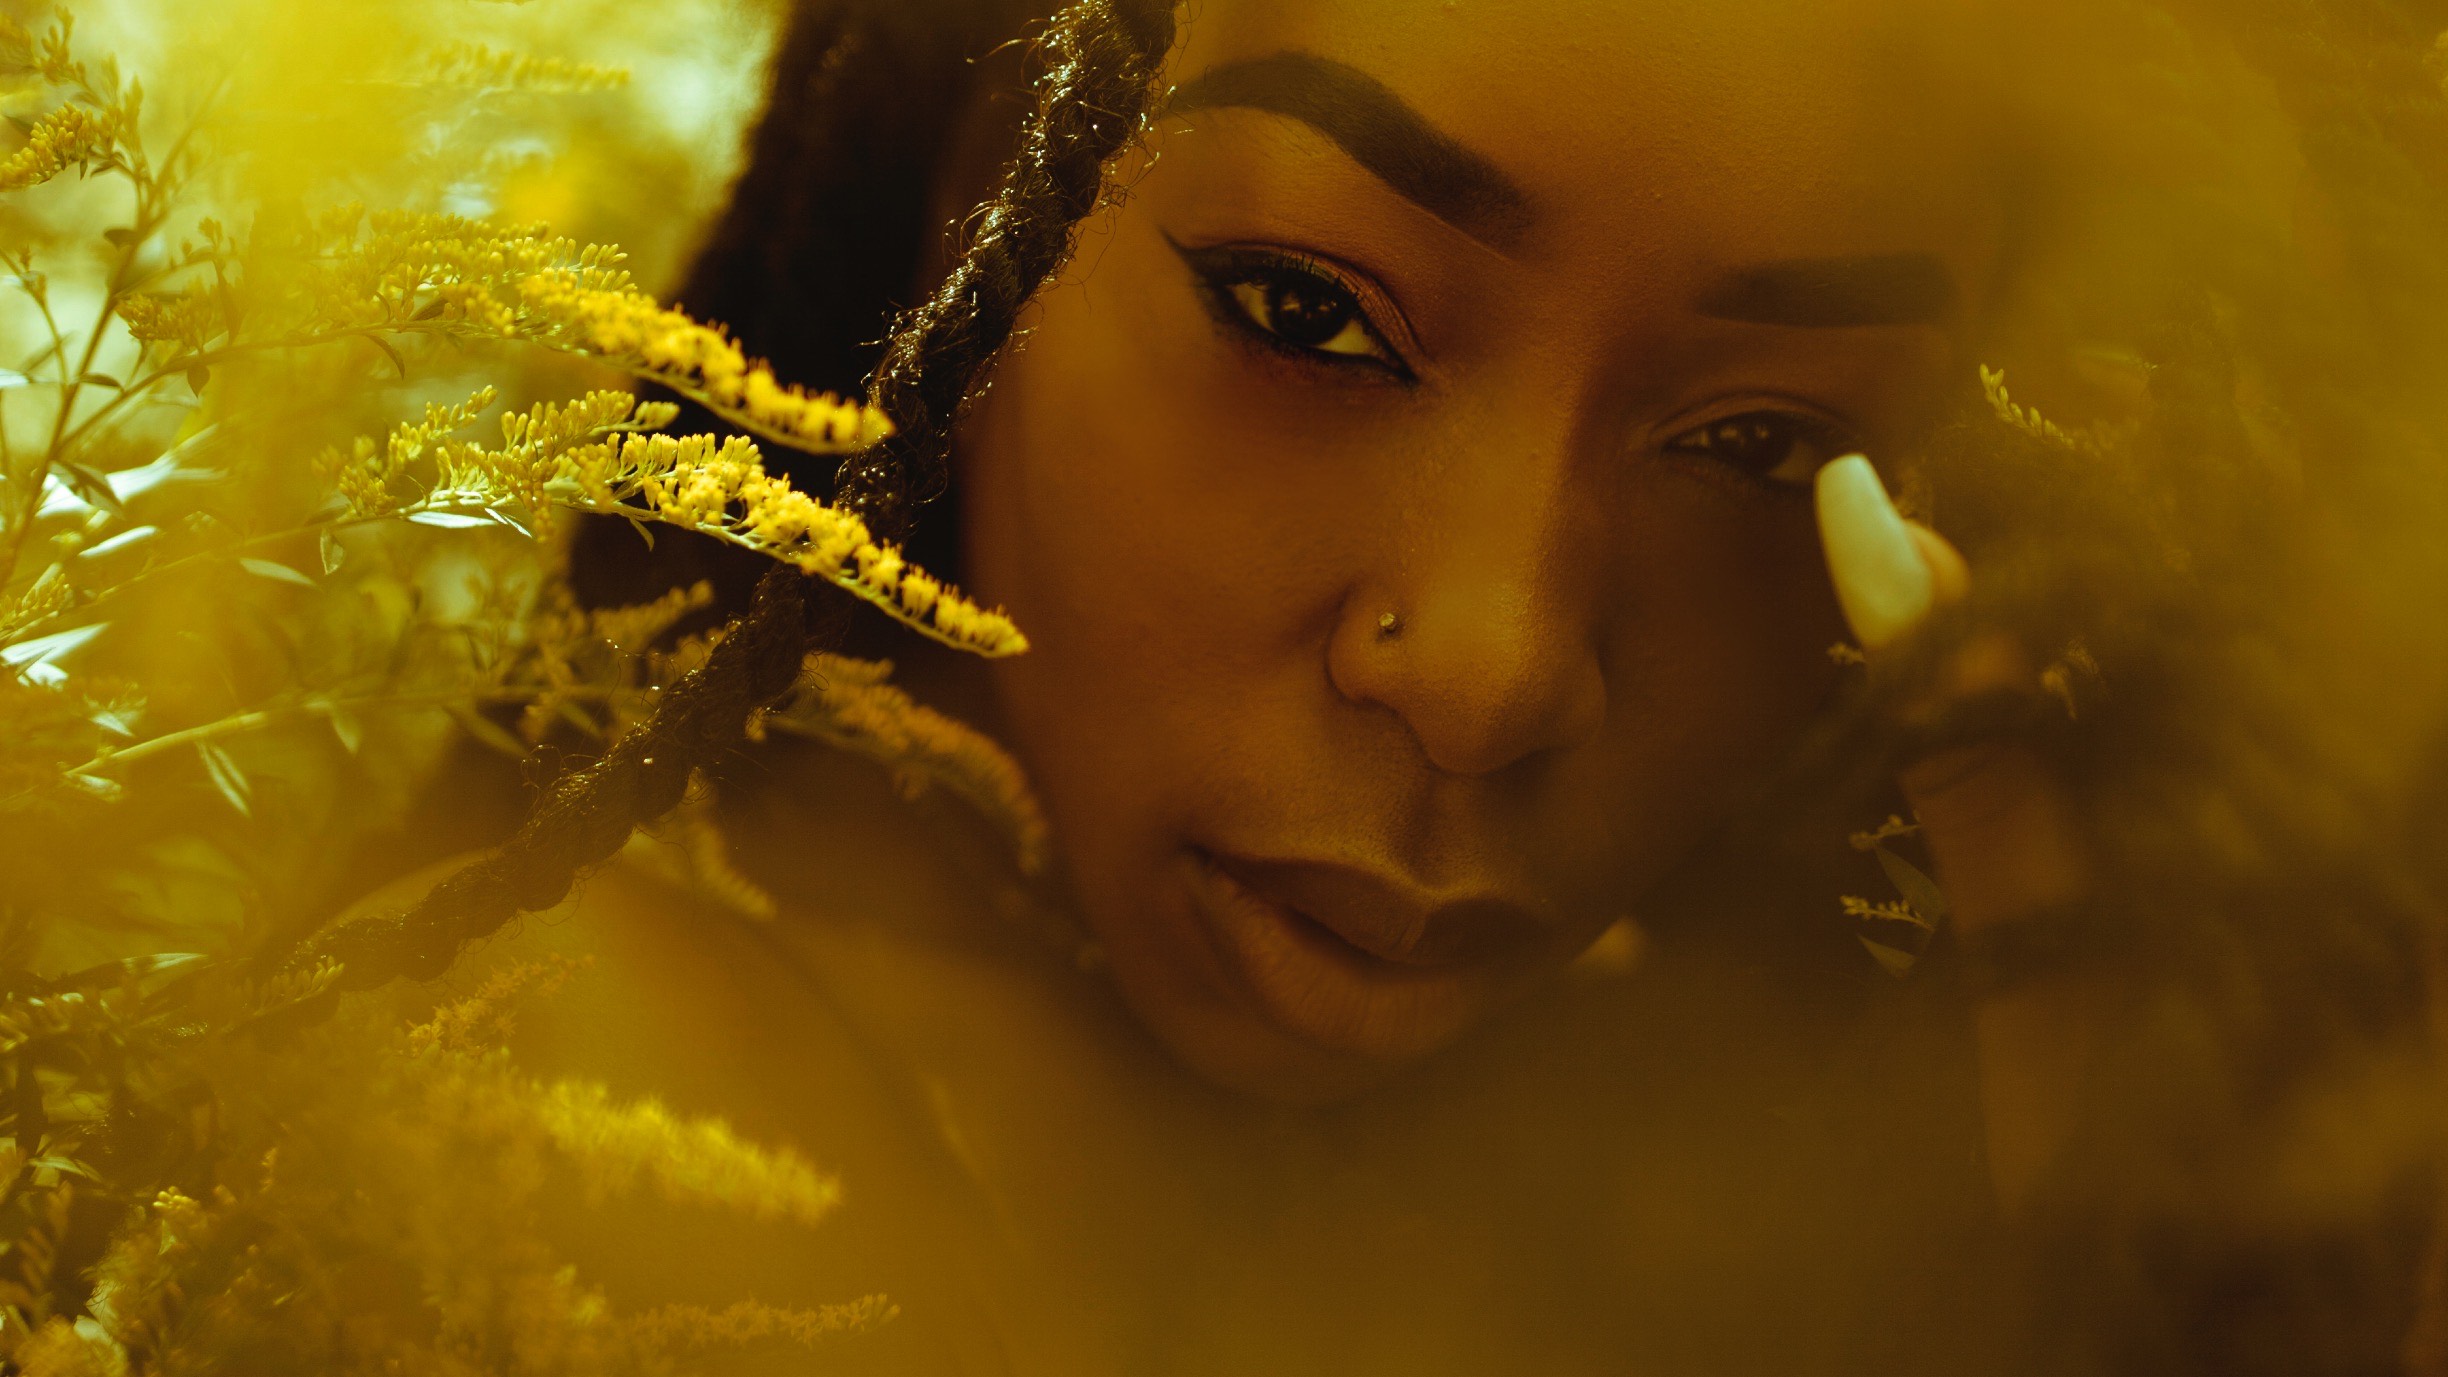 A close up shot of Amanda, a Black woman gazes into the lens through some plants.